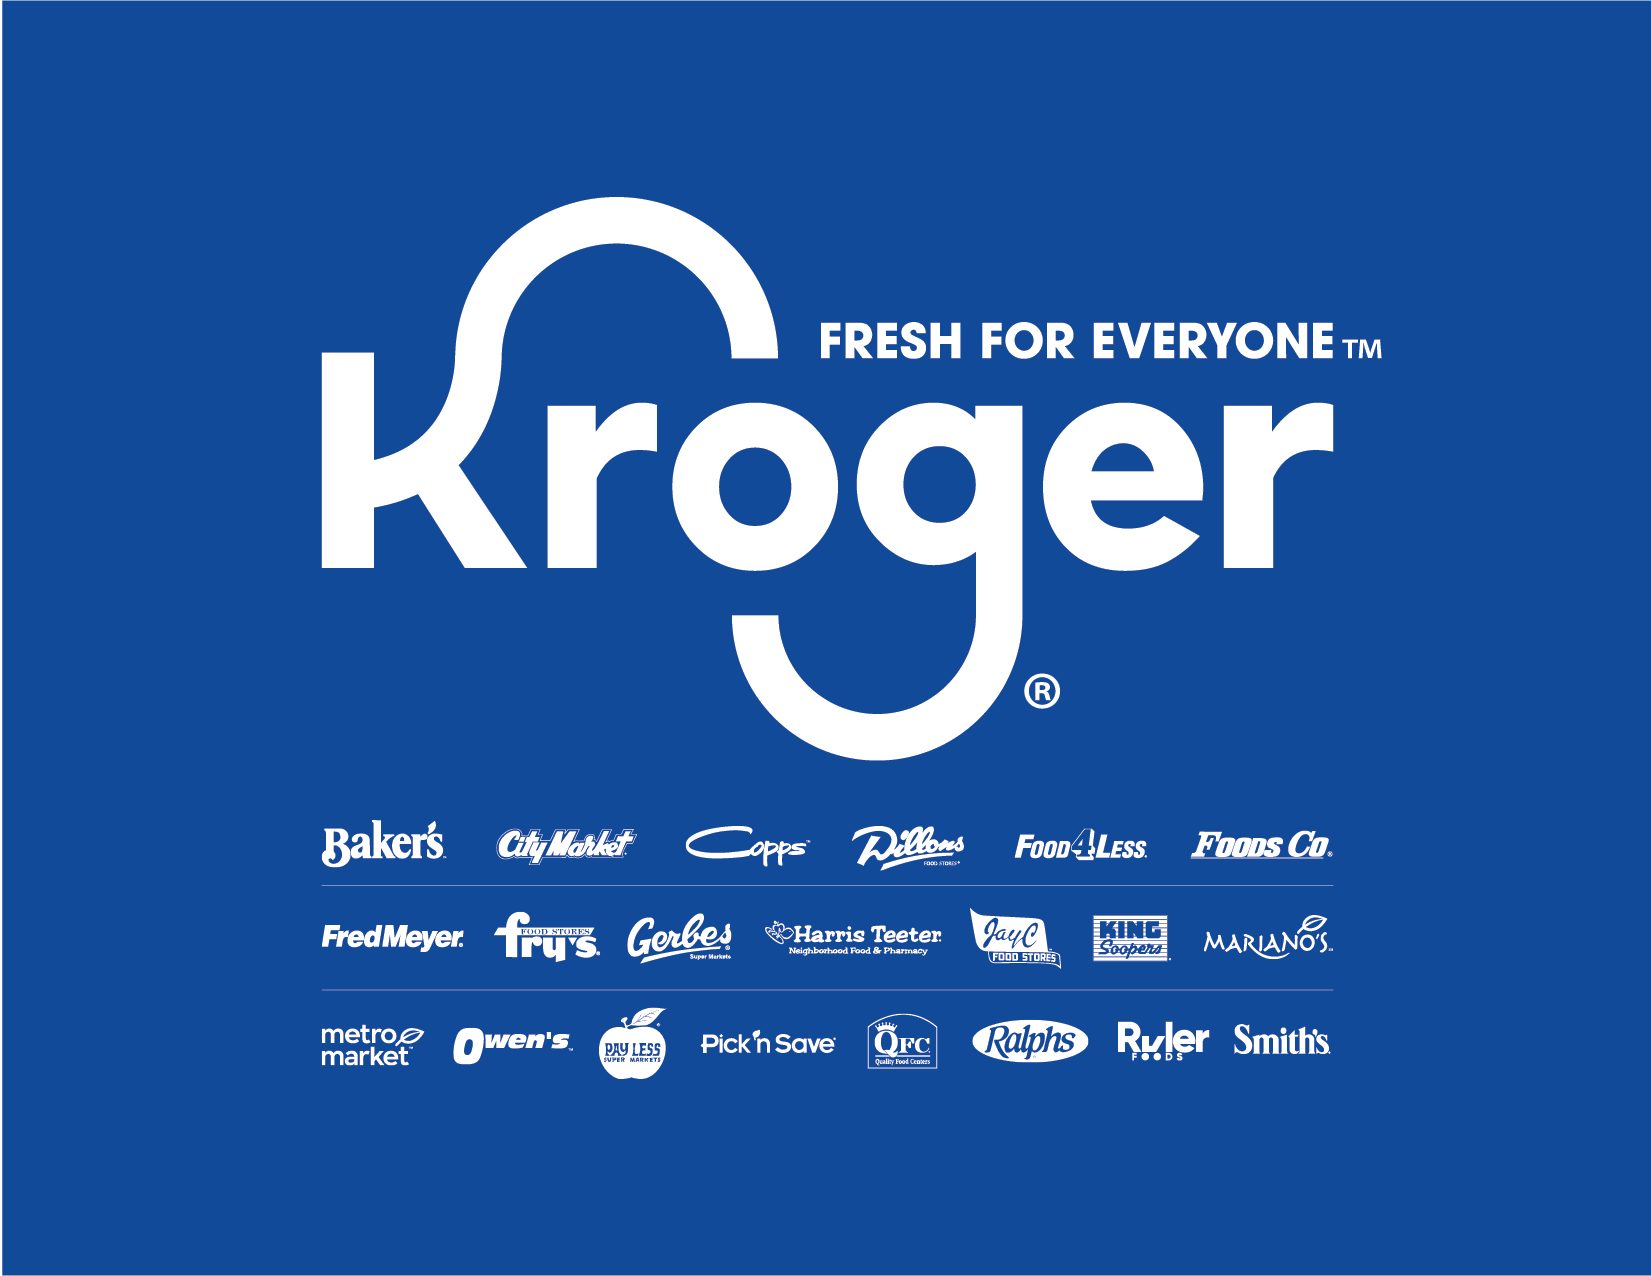 Kroger Fresh For Everyone